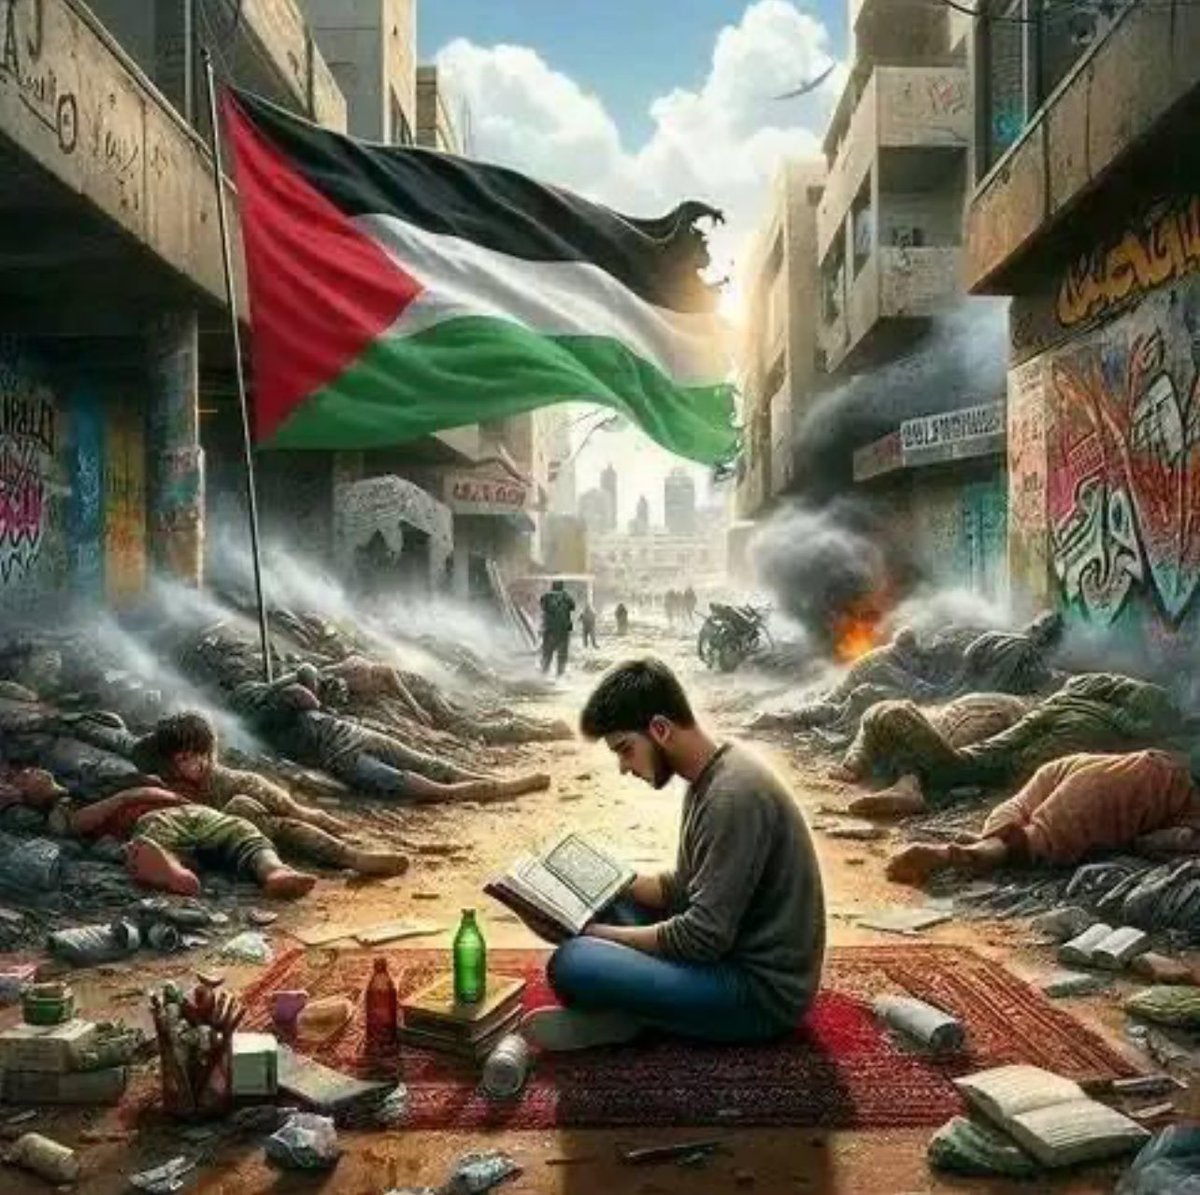 #Saveghazachildren #Savephalastine #Stopgenocideinghaza
خداراہ رمضان کے آخری ایام ہیں  اللّٰہ تعالیٰ سے رو رو کر گڑگڑا کر فلسطینیوں کے لیے دعا کریں 
ان پر یہ مشکل وقت ختم ہو جاۓ گا لیکن ہمیں محروم کر دیا جاۓ گا ہمیشہ کے لیے اللّٰہ تعالیٰ کی طرف سے 
🤲🤲🤲🤲🤲🤲🤲🤲🤲🤲🤲🤲🤲🤲